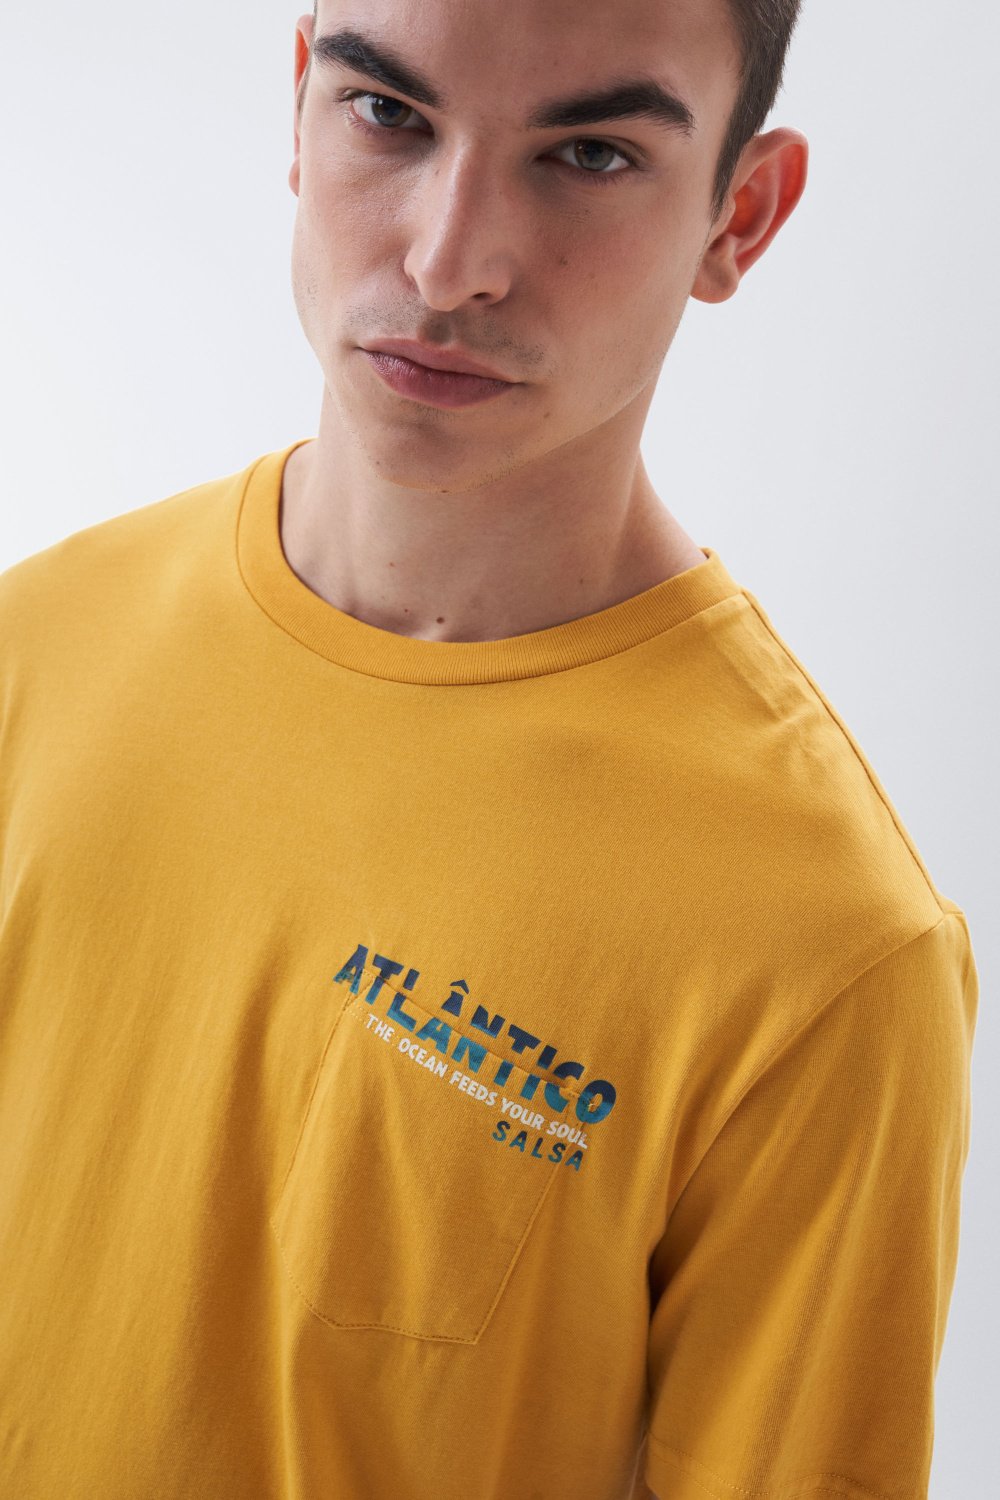 T-shirt grfica Atlntico - Salsa